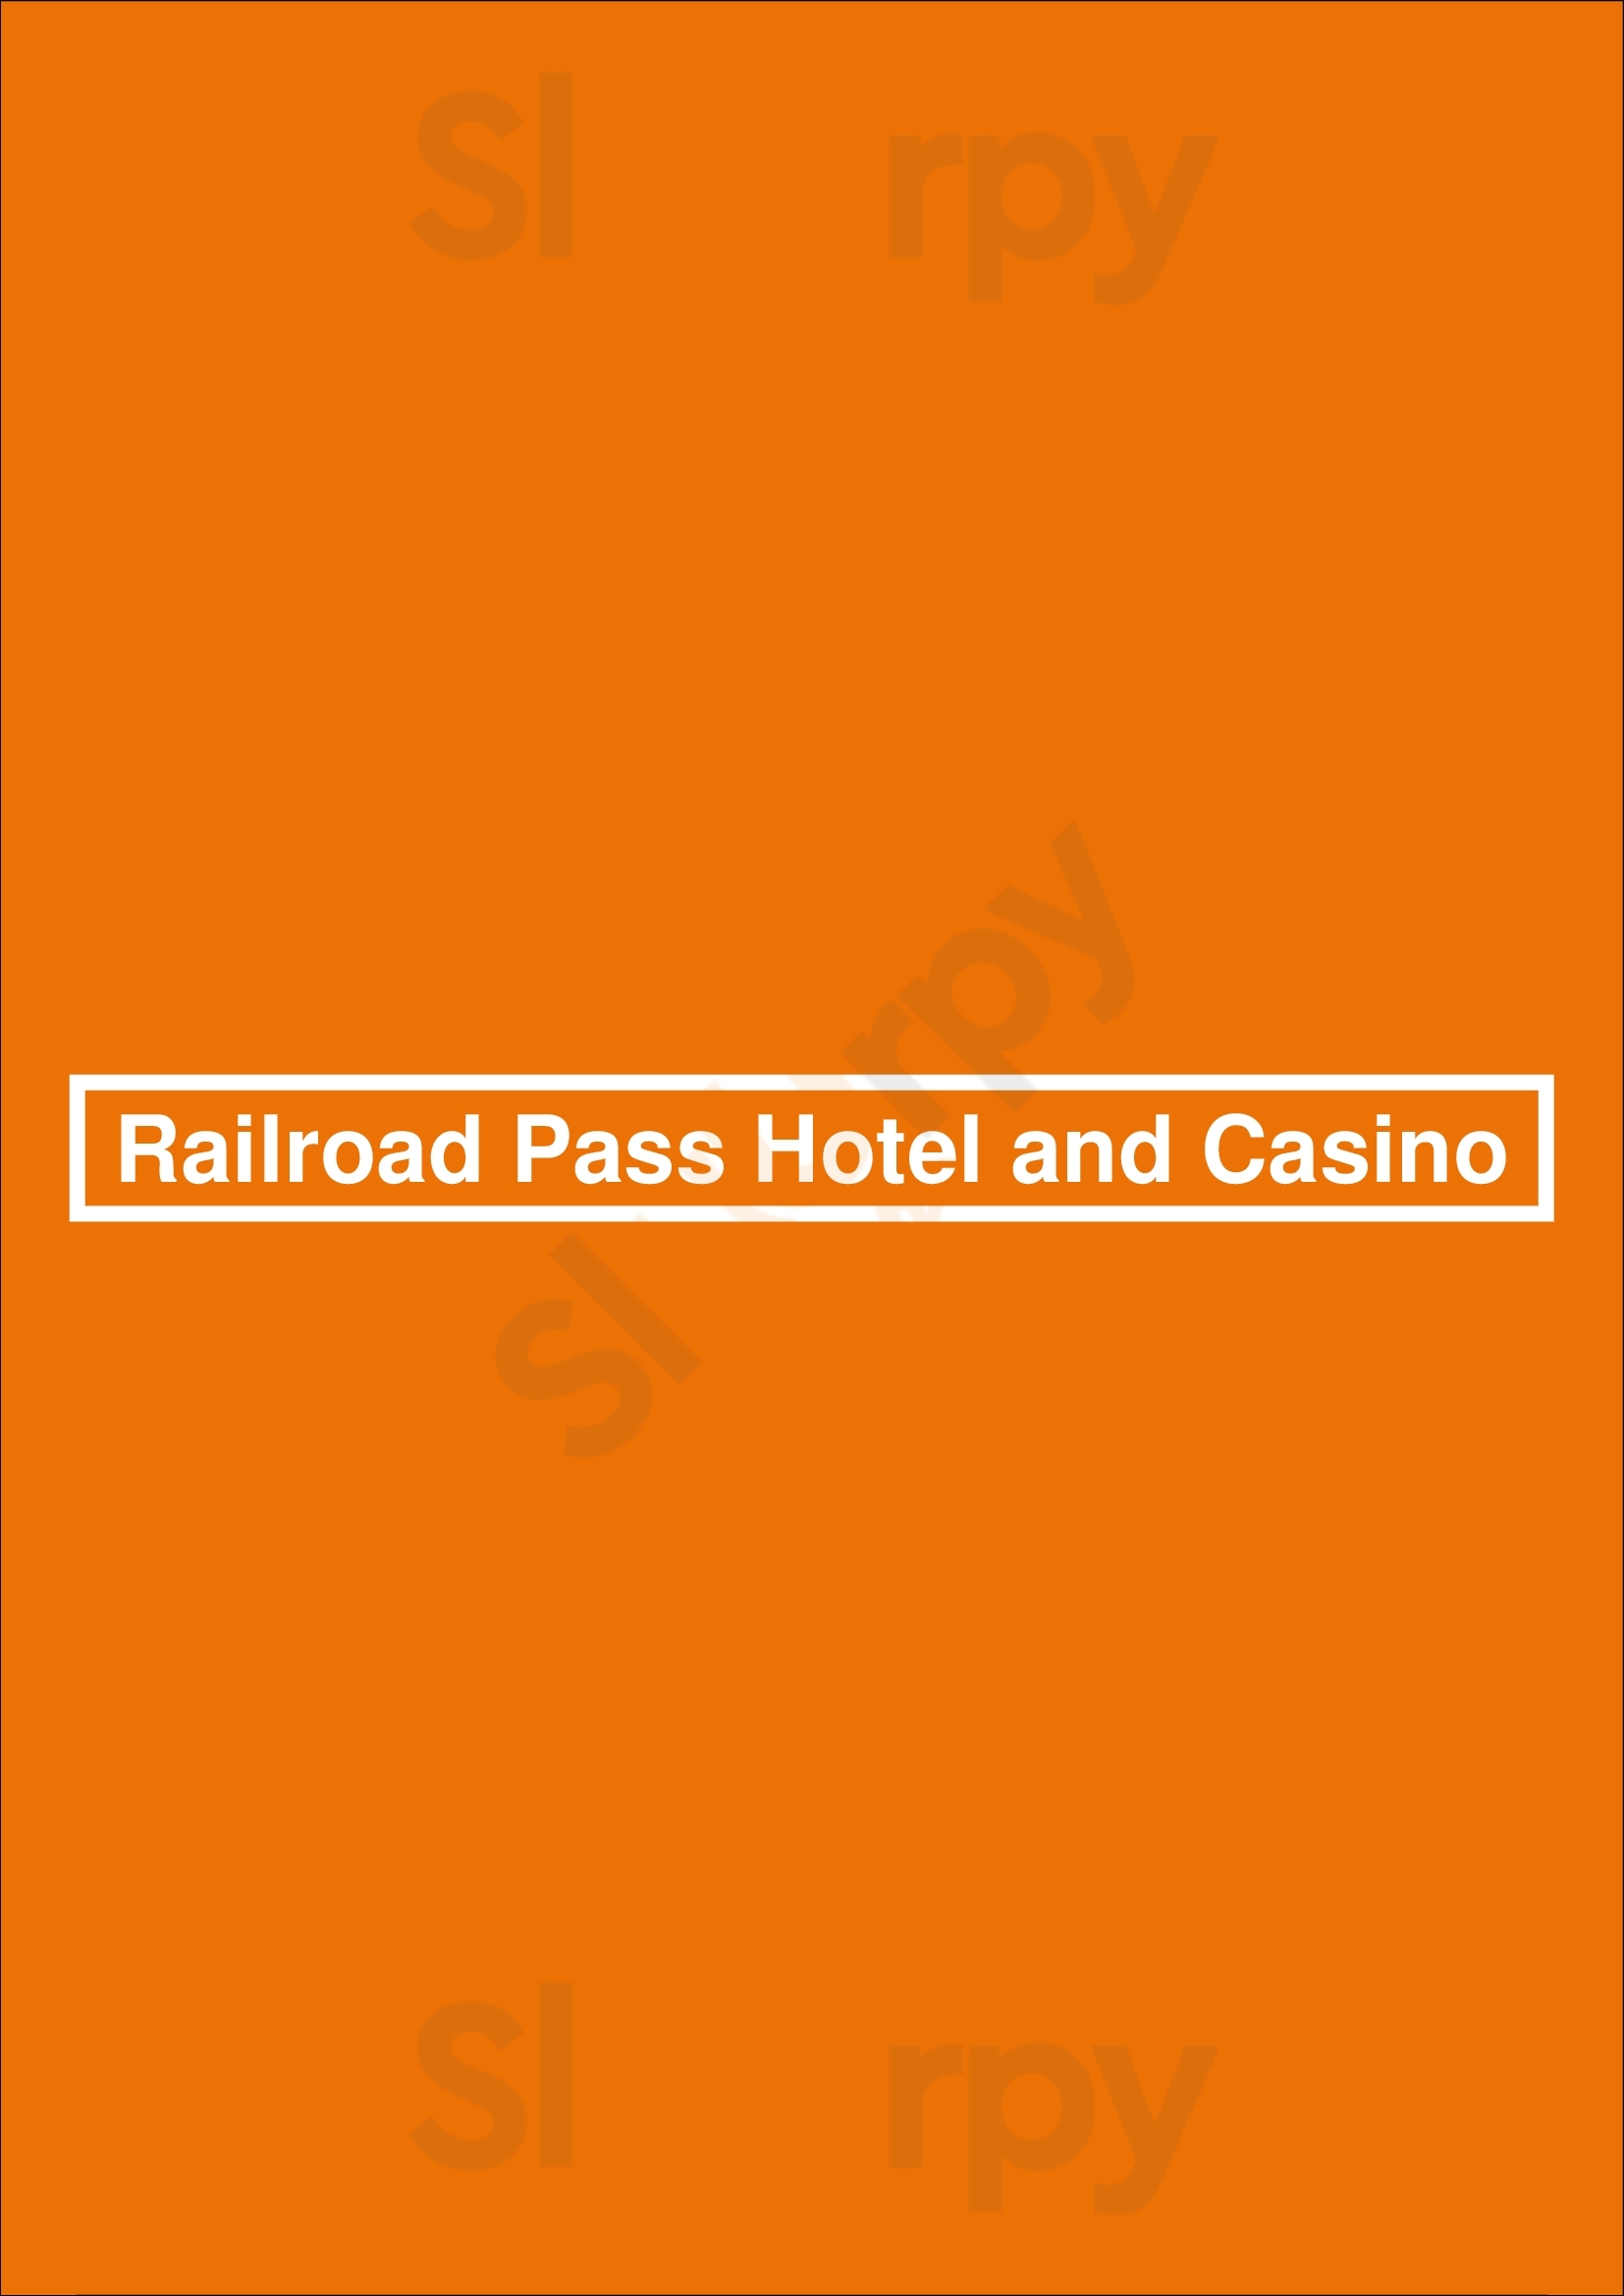 Railroad Pass Hotel And Casino Henderson Menu - 1